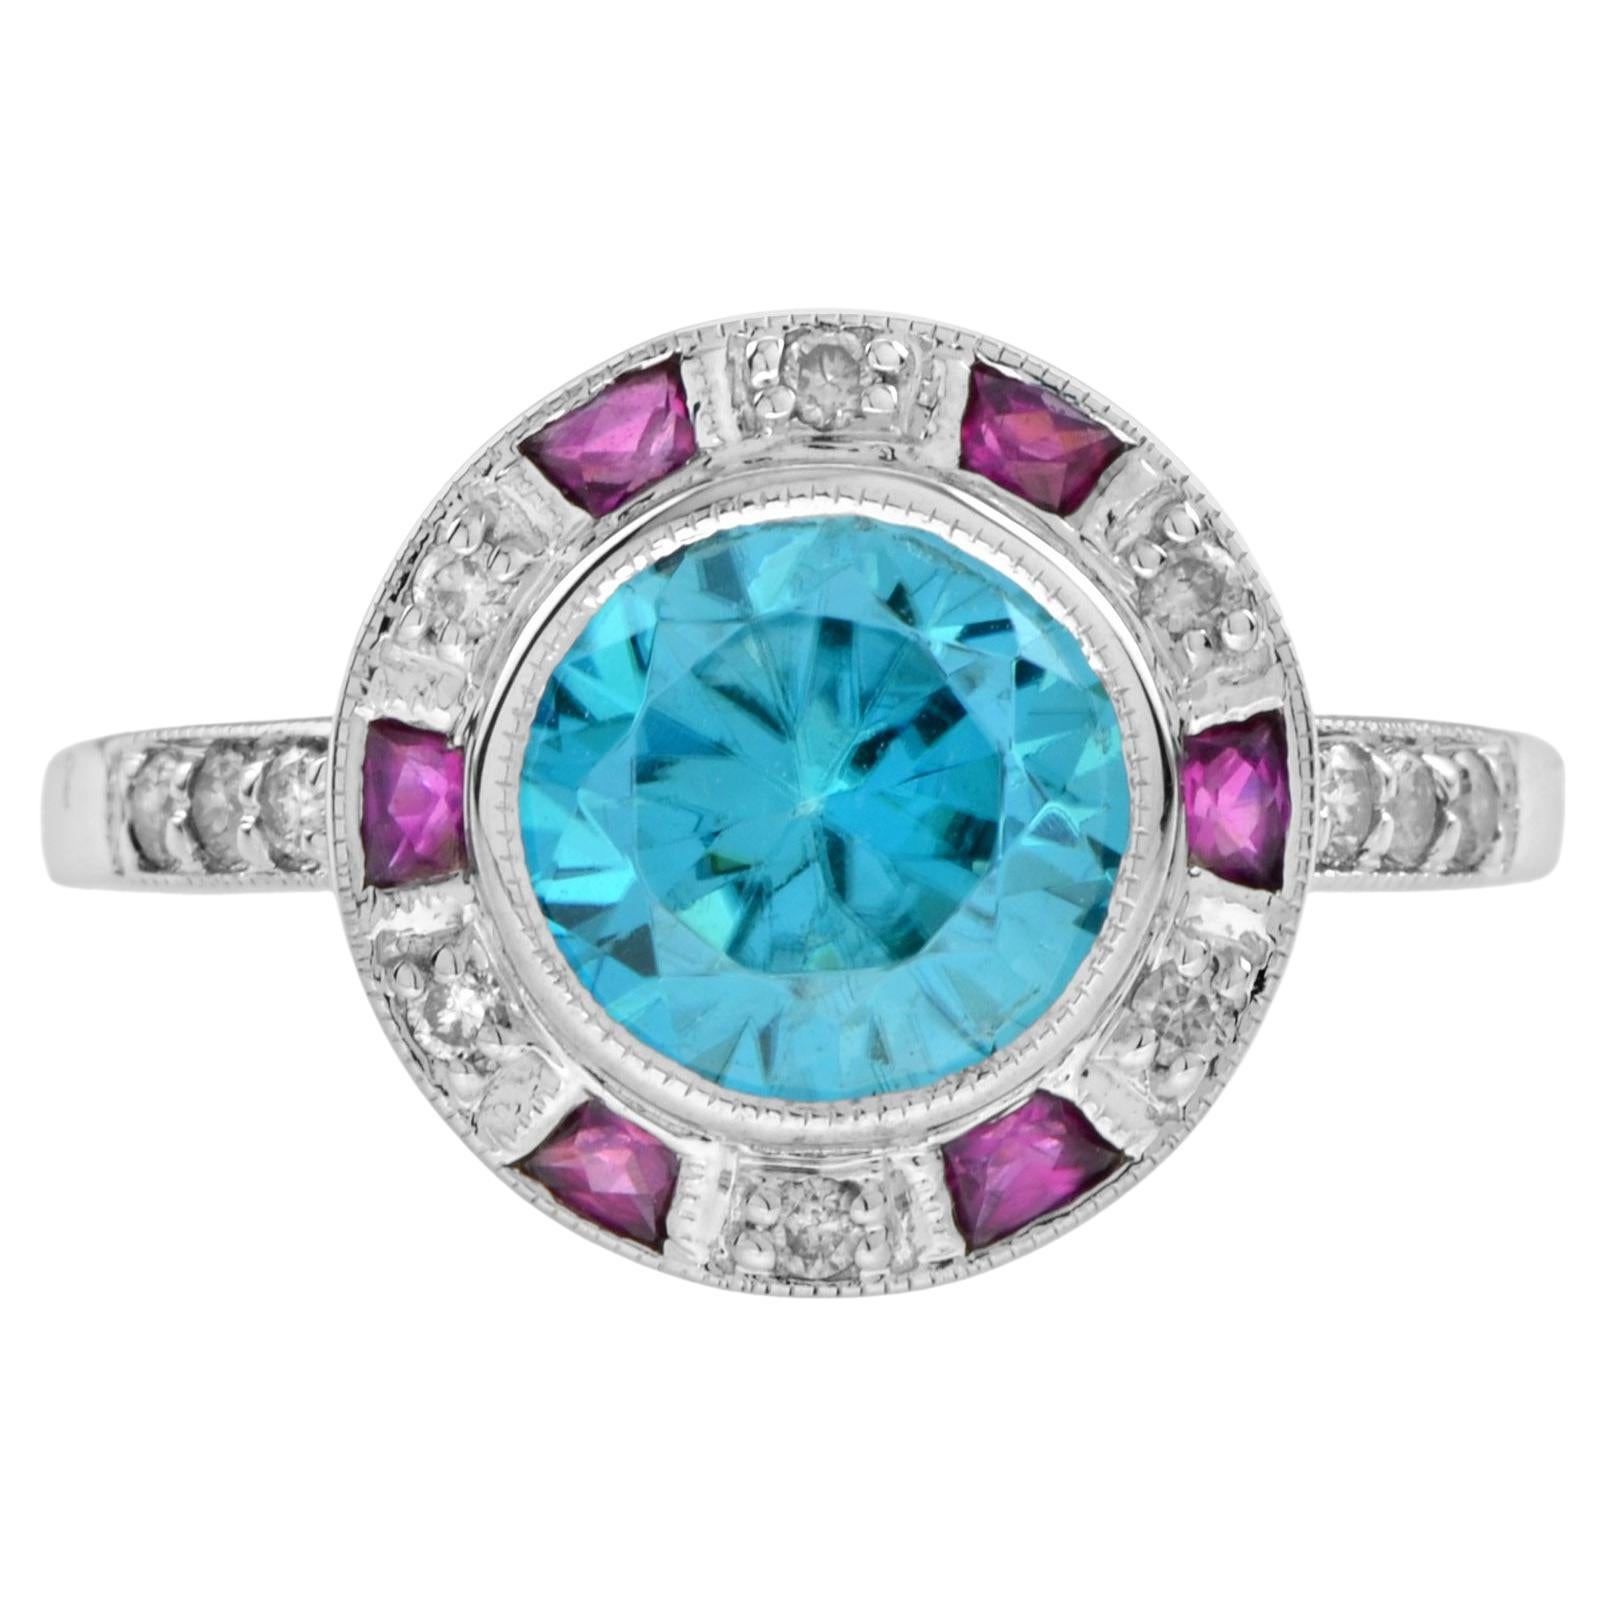 Certified Blue Zircon Diamond Ruby Art Deco Style Ring in 14k White Gold 